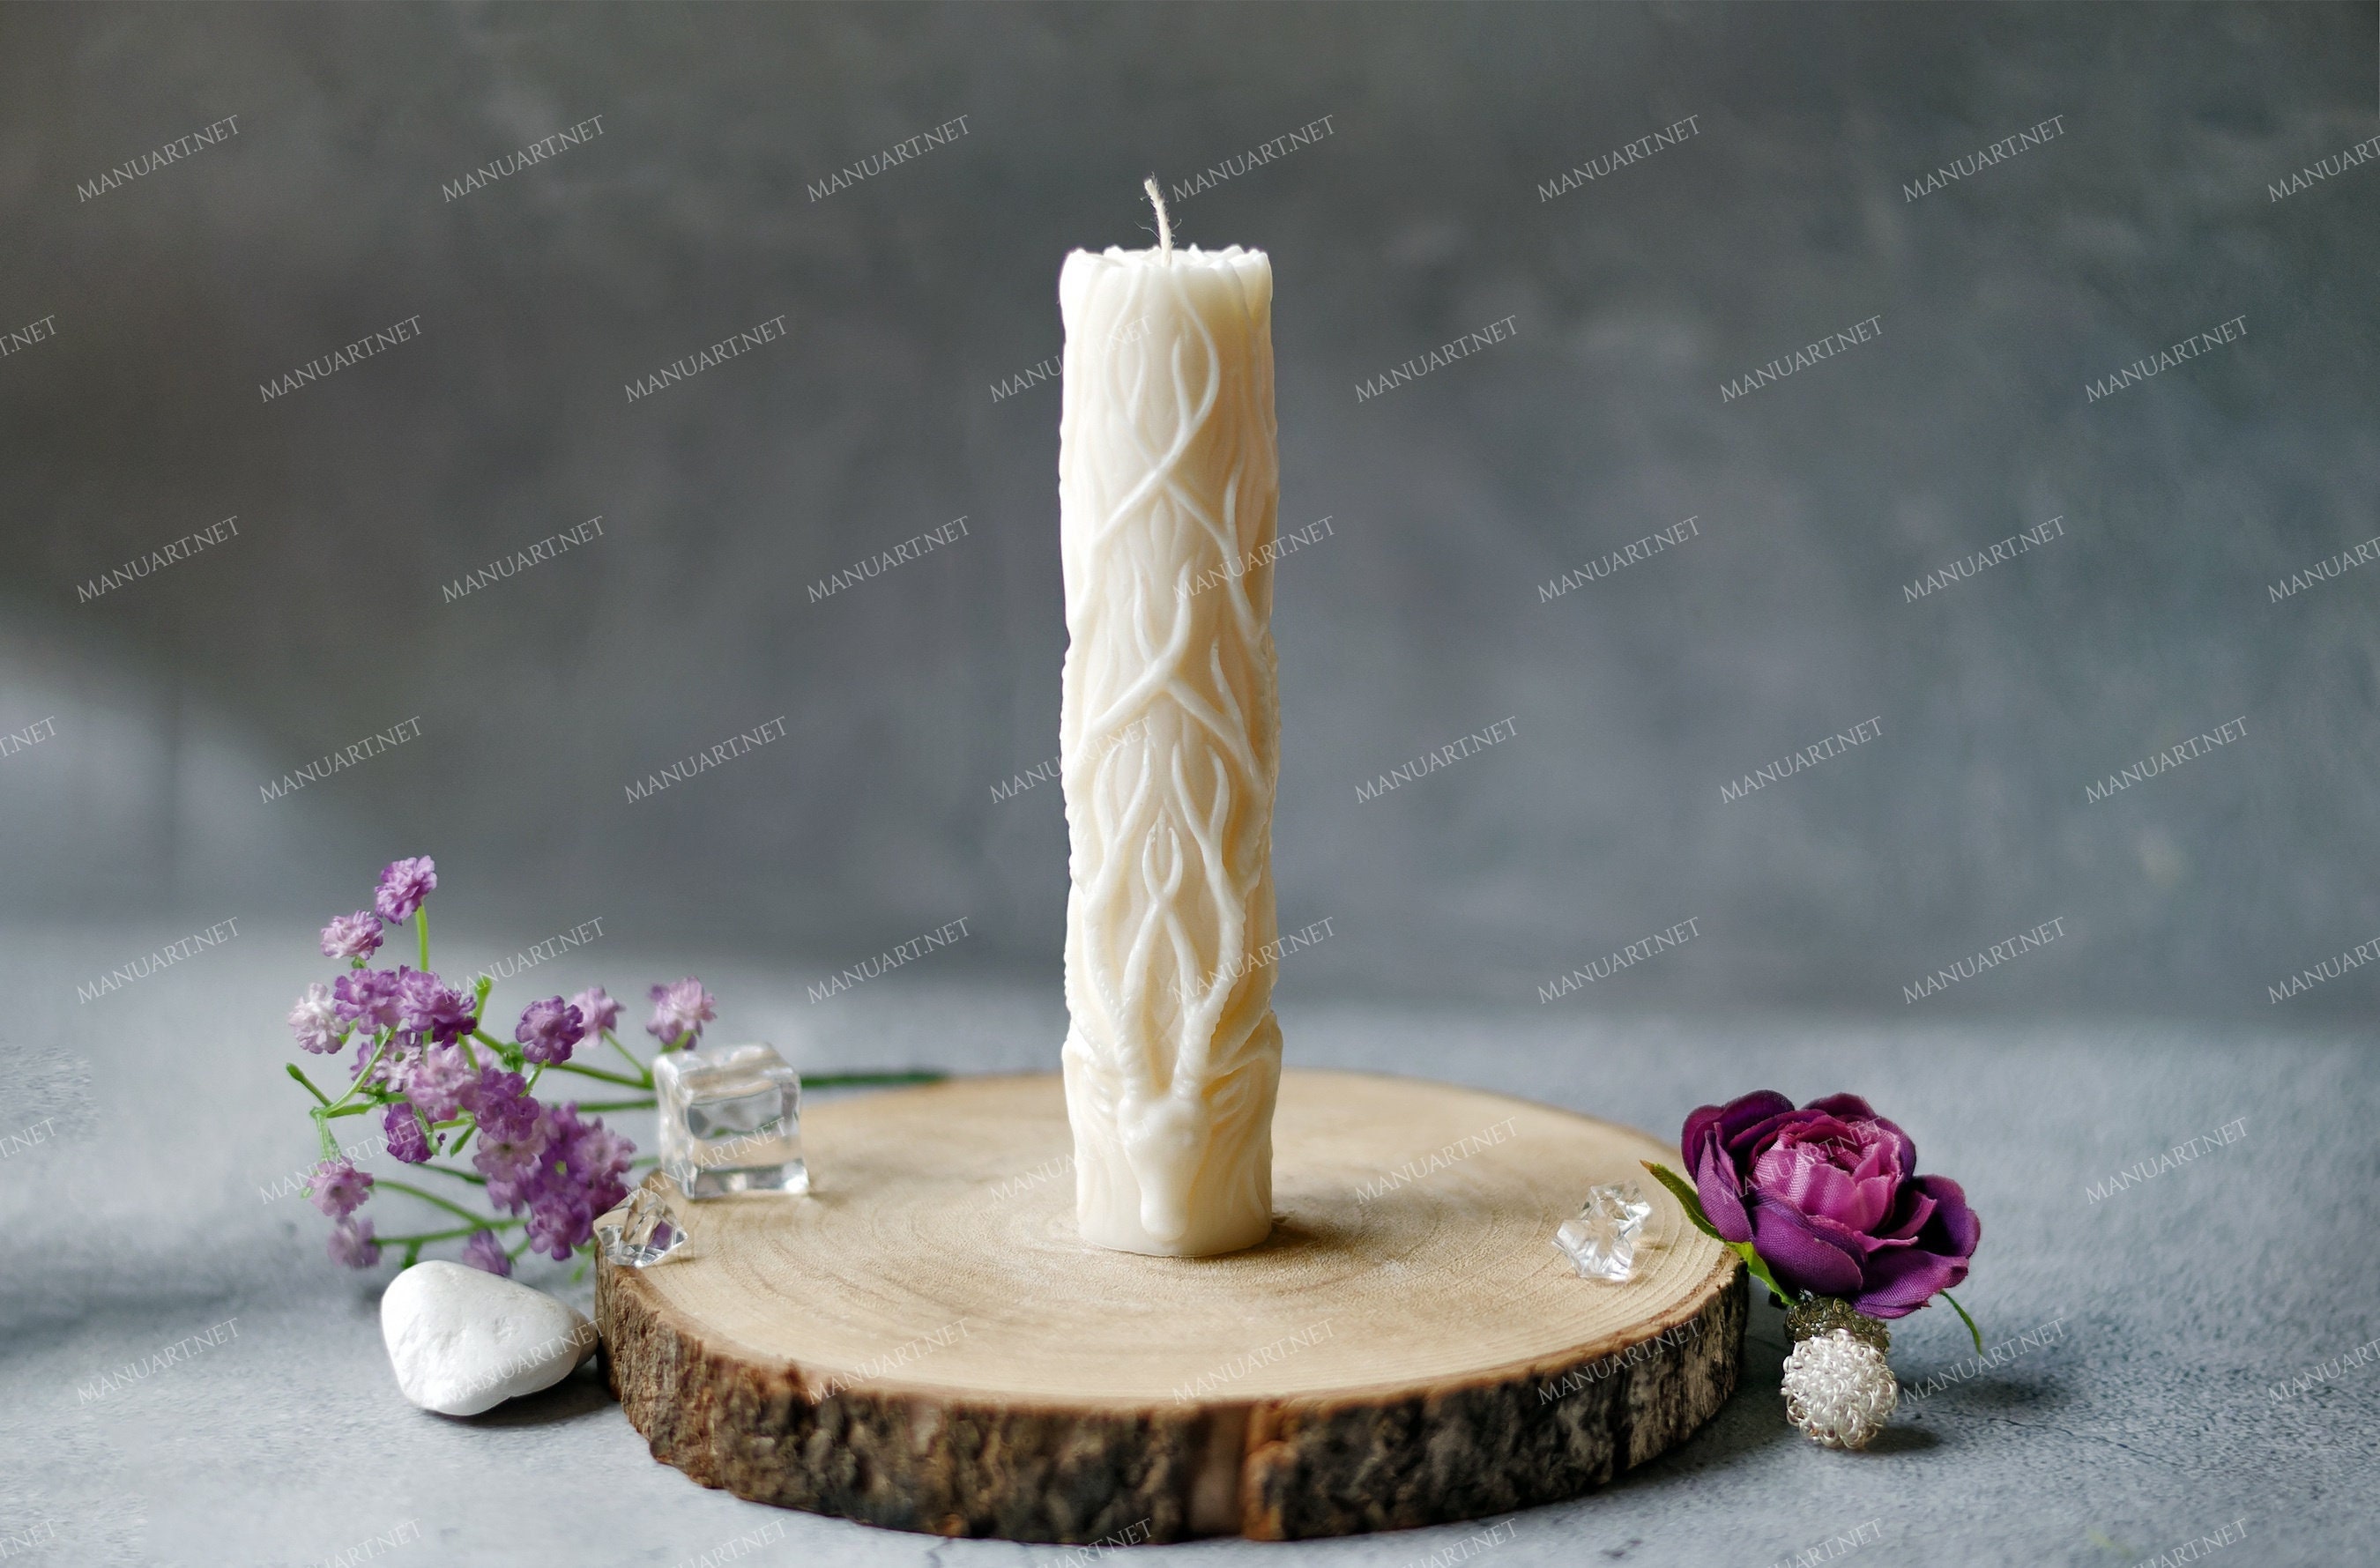 Silicone Life Tree Tea Light Candle Mold Wax Melt Lotion Bar